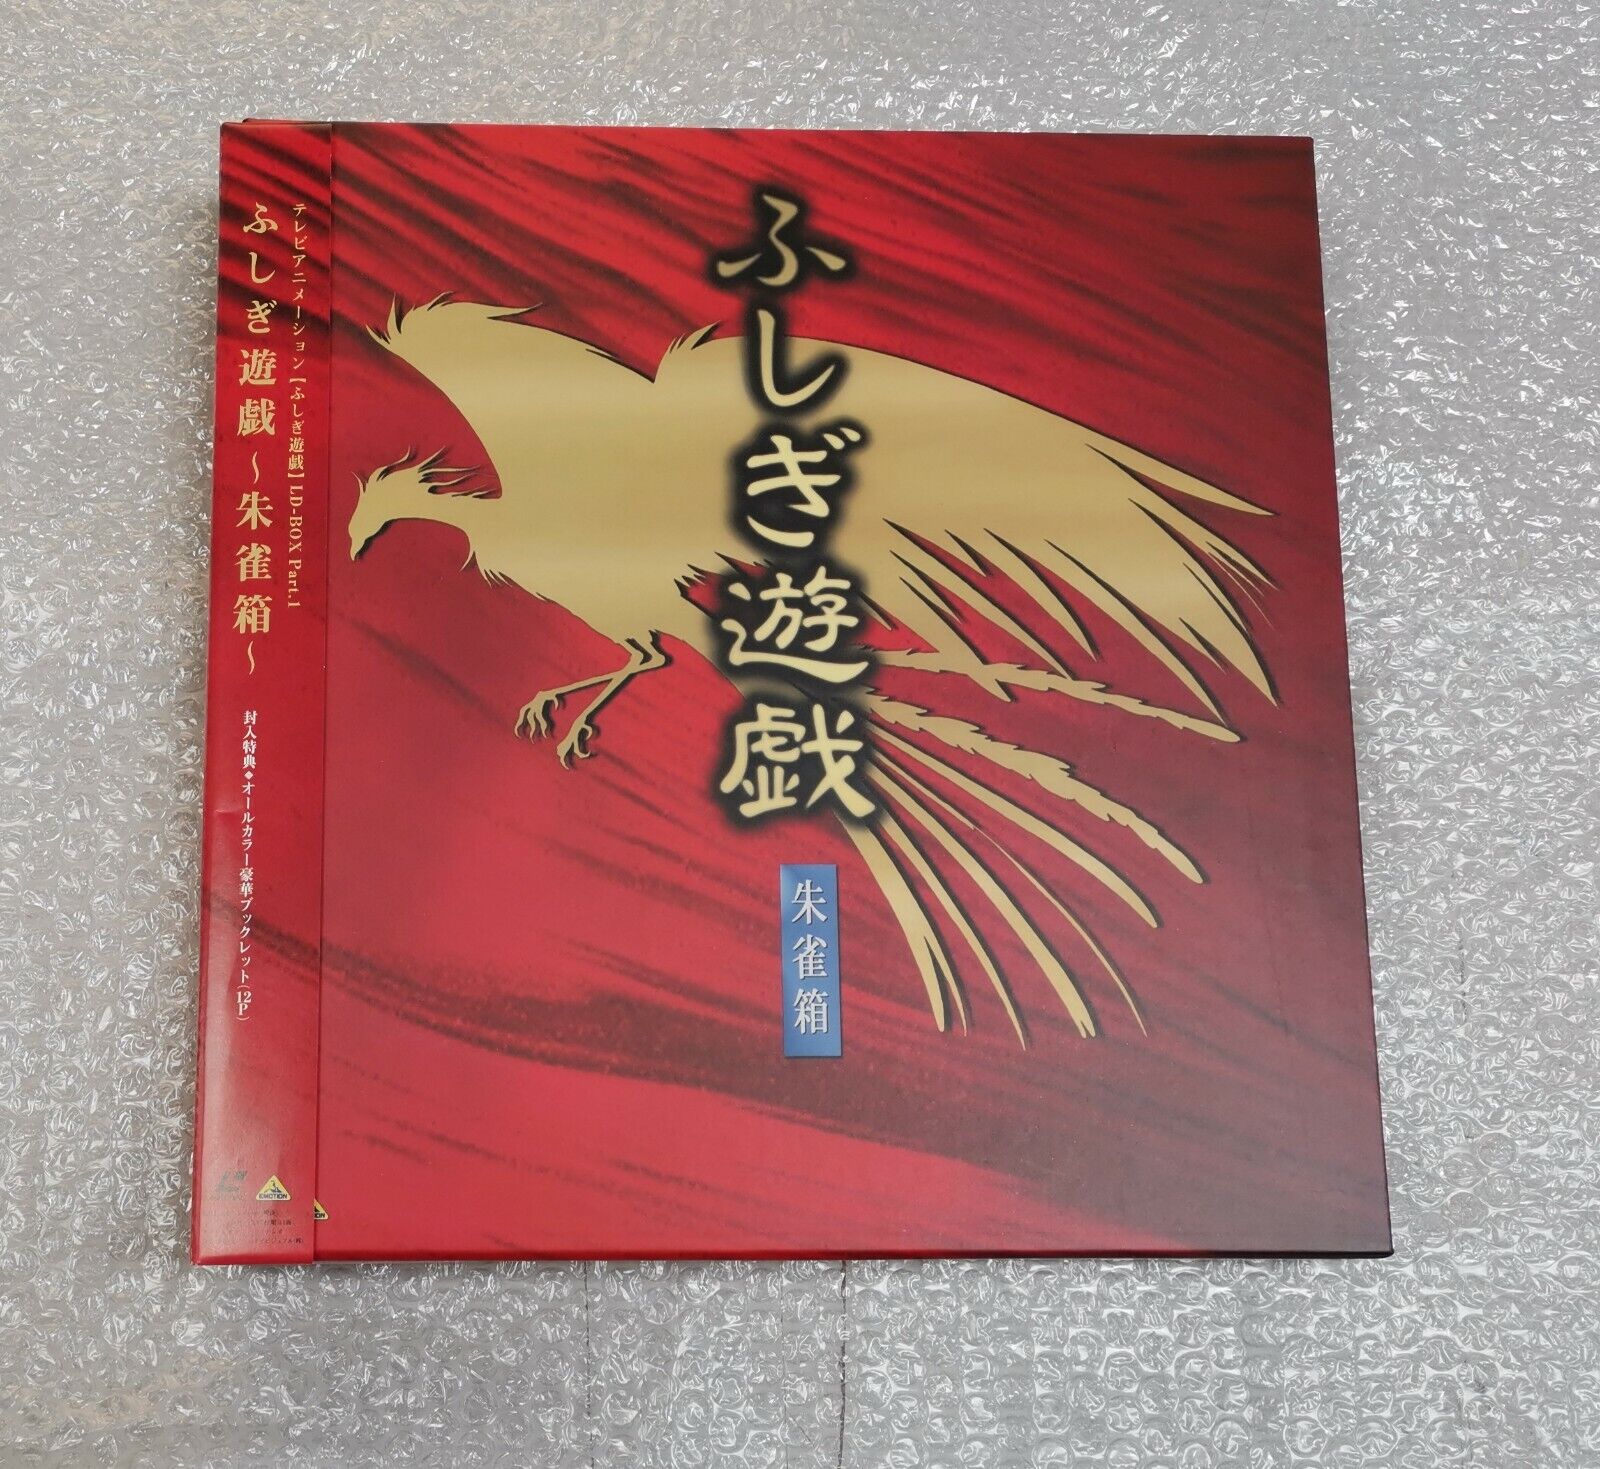 Fushigi Yugi - Lazer Disc Boxset Vol 1 (Authentic Japanese Item) 7 Disc + Extras